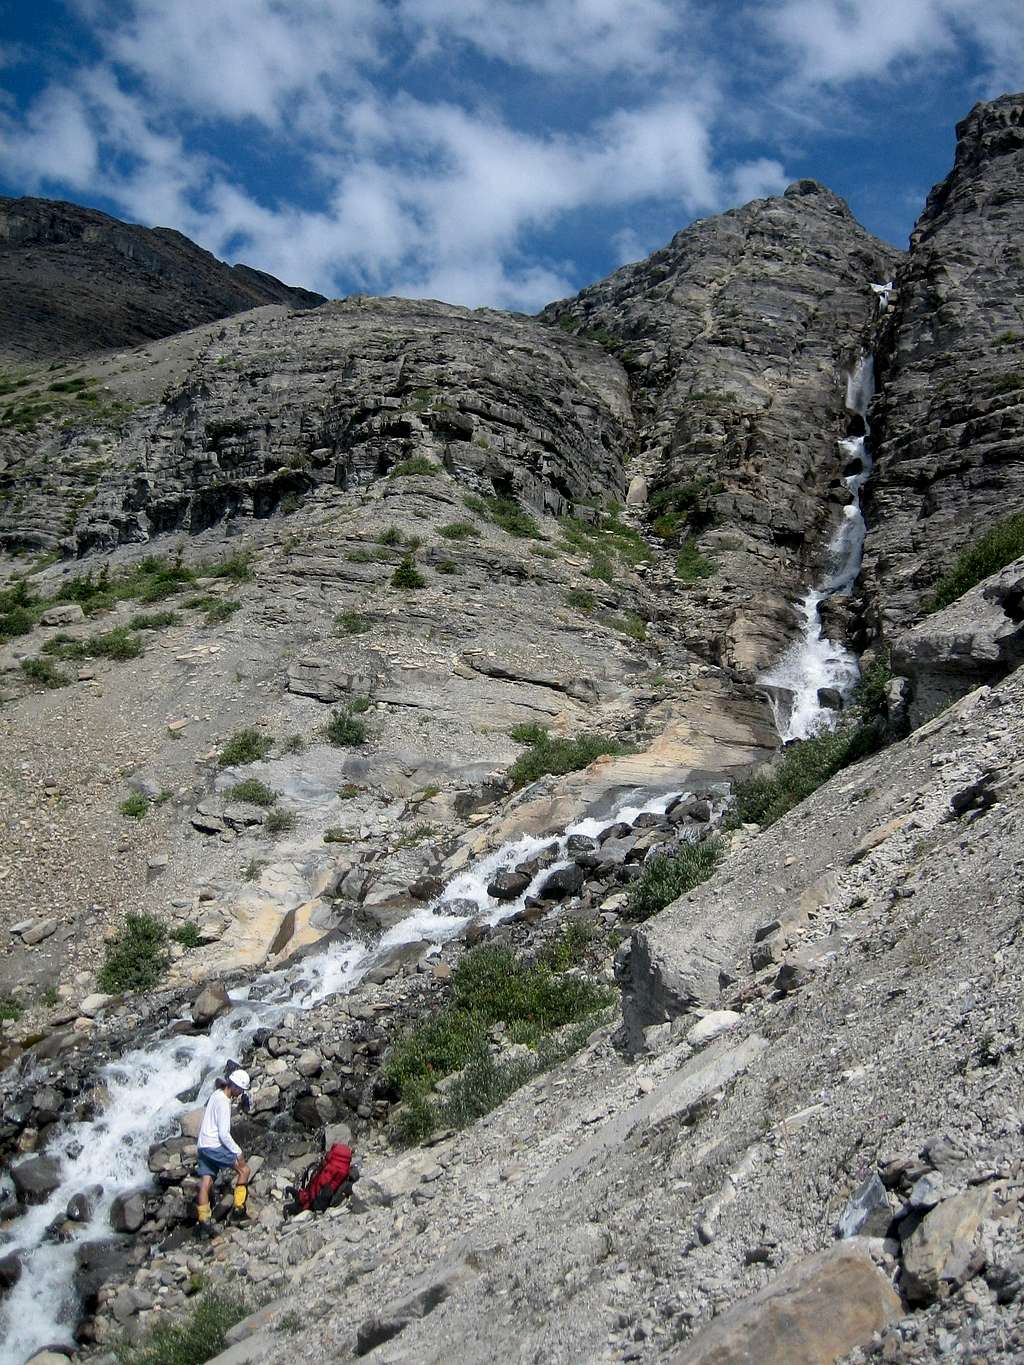 Glacier stream/waterfall crossing